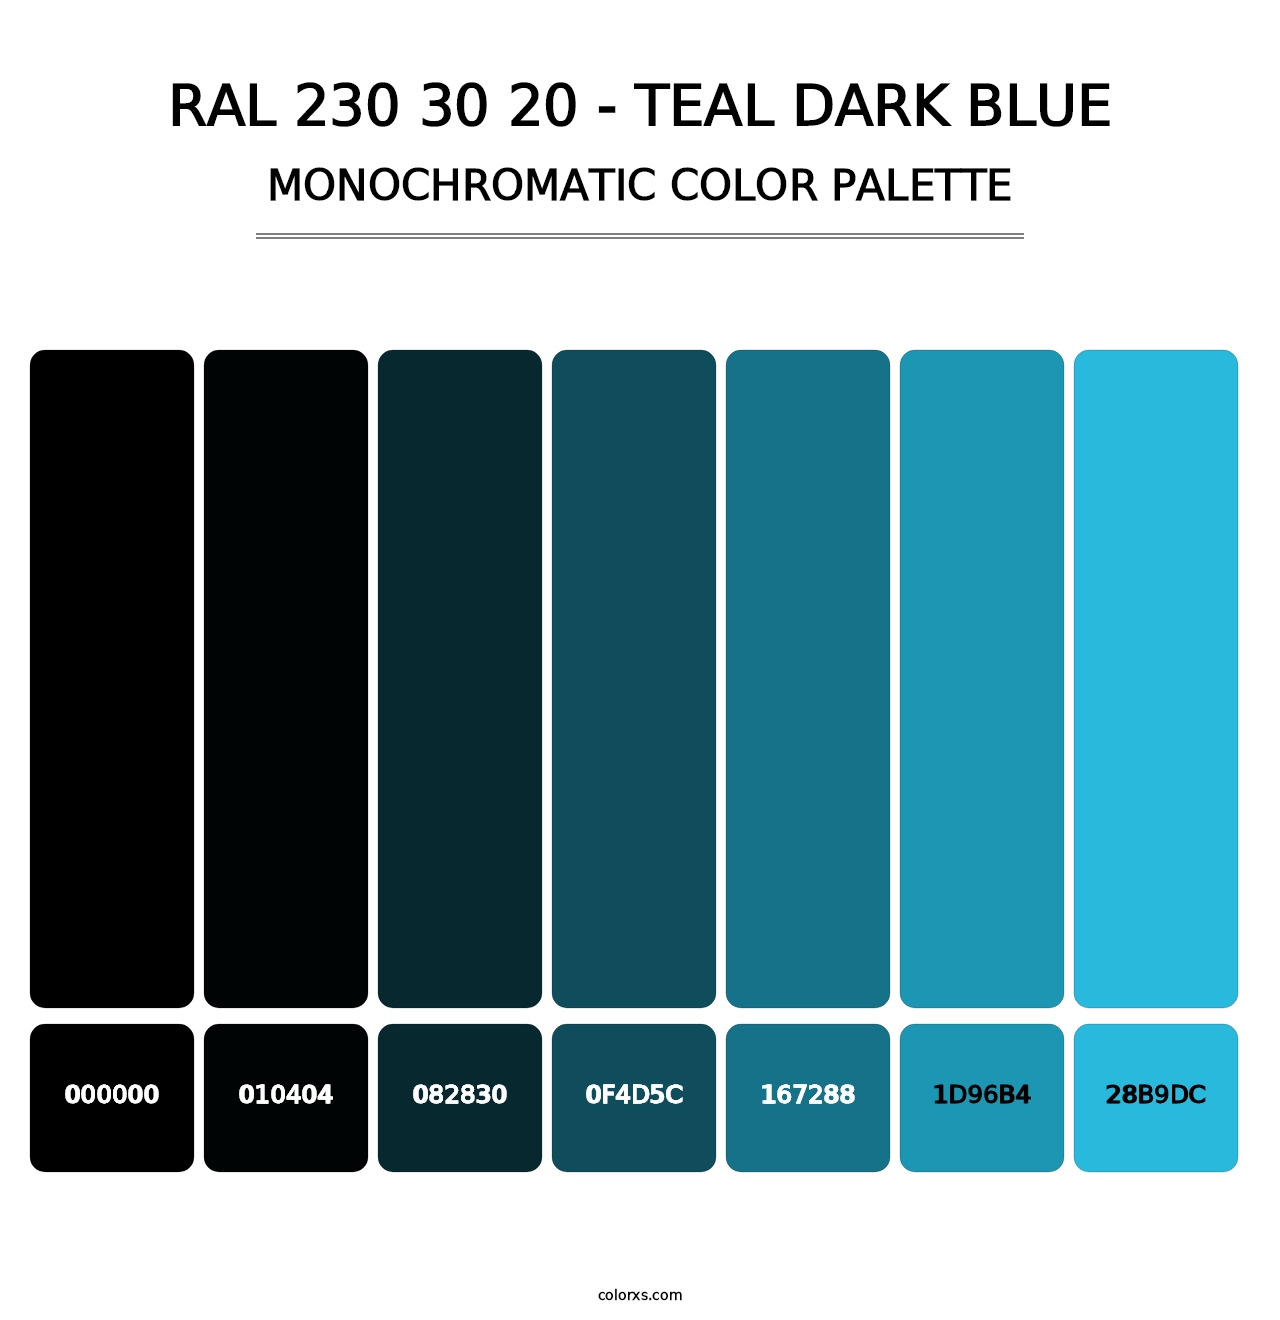 RAL 230 30 20 - Teal Dark Blue - Monochromatic Color Palette